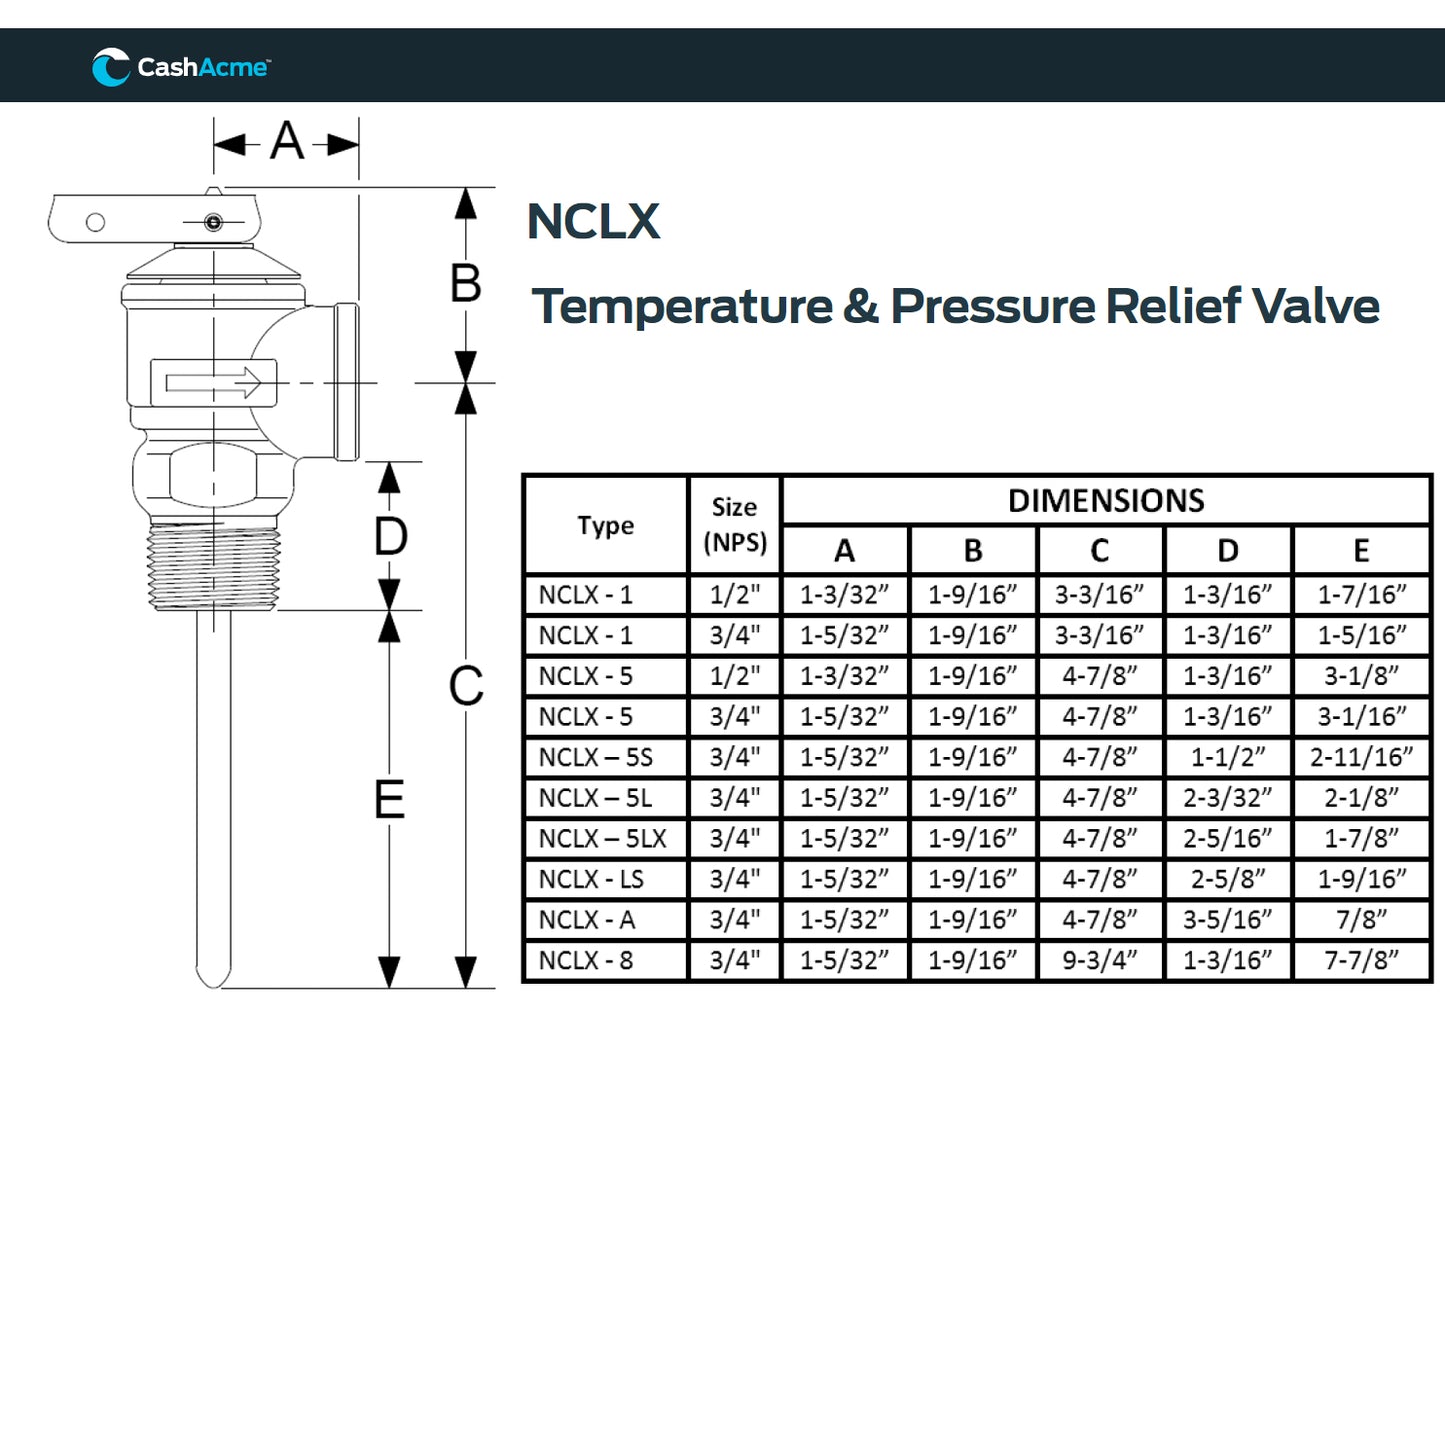 15836-0150 - 3/4" NCLX-5 Domestic Temperature and Pressure Relief Valve